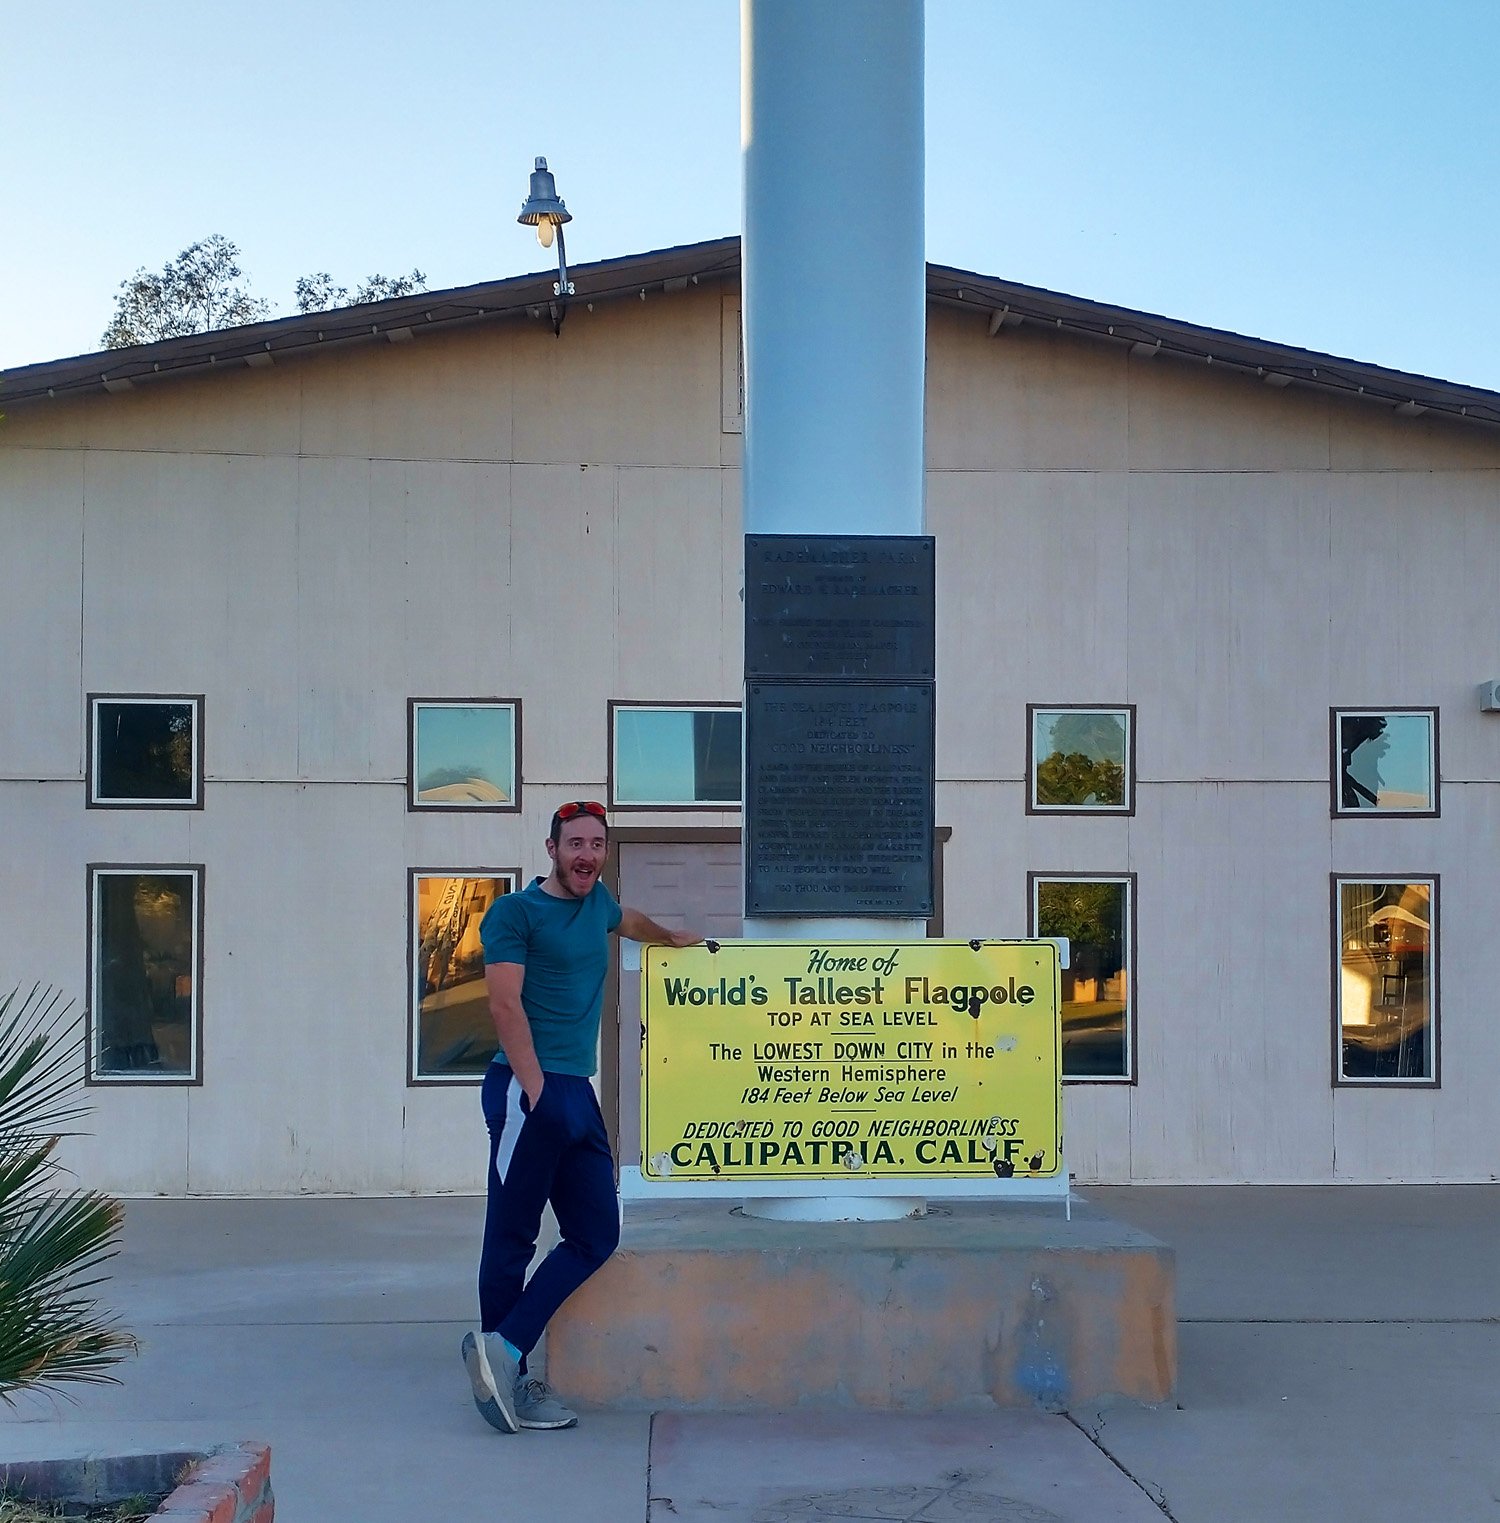 Calipatria, California. Tallest flagpole. It's not that tall.